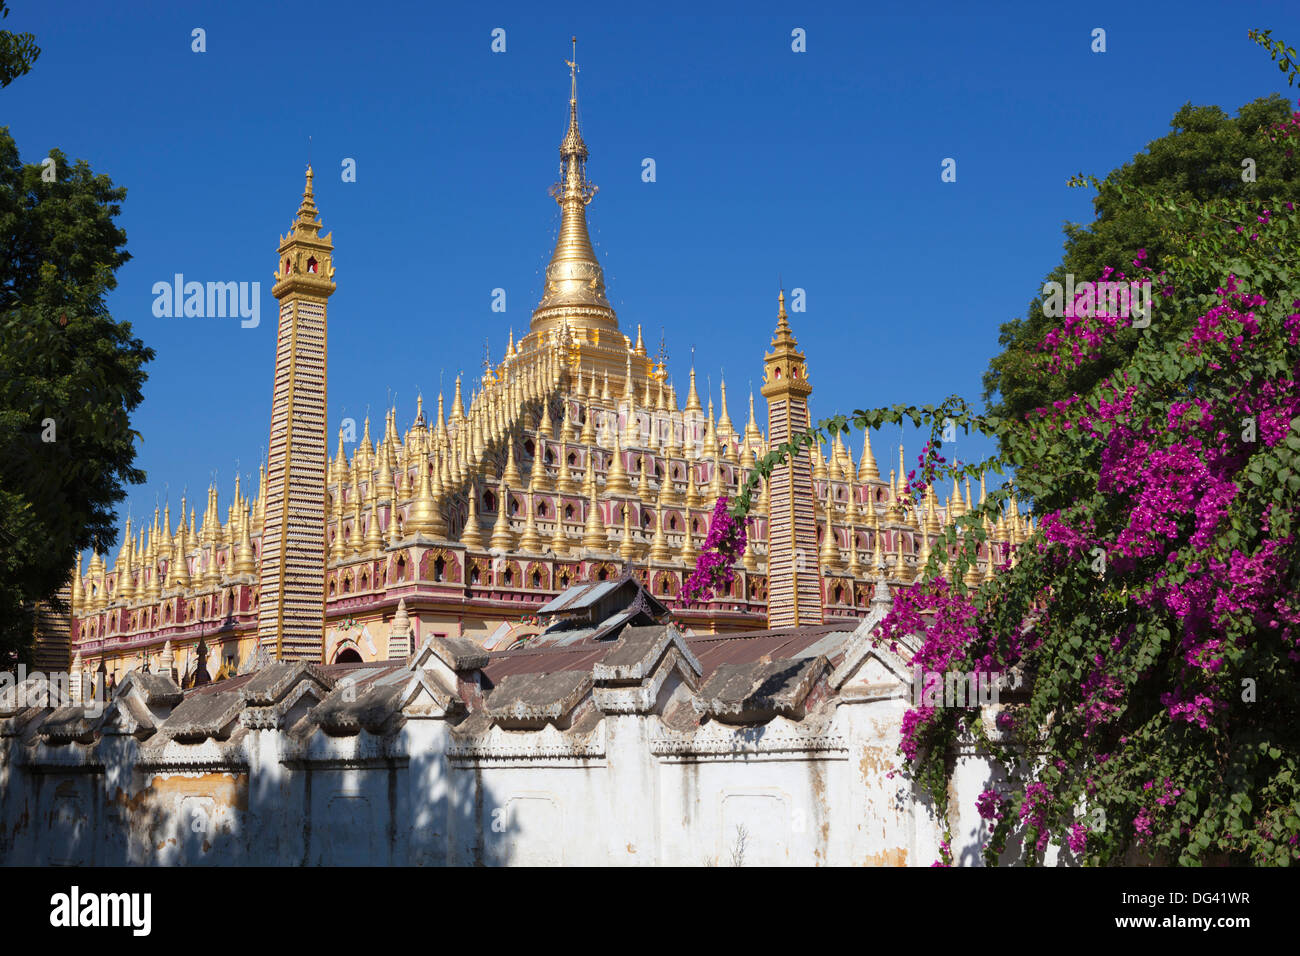 Thanboddhay Paya (pagoda) with rows of gilt mini-stupas on roof, near Monywa, Monywa Region, Myanmar (Burma), Asia Stock Photo